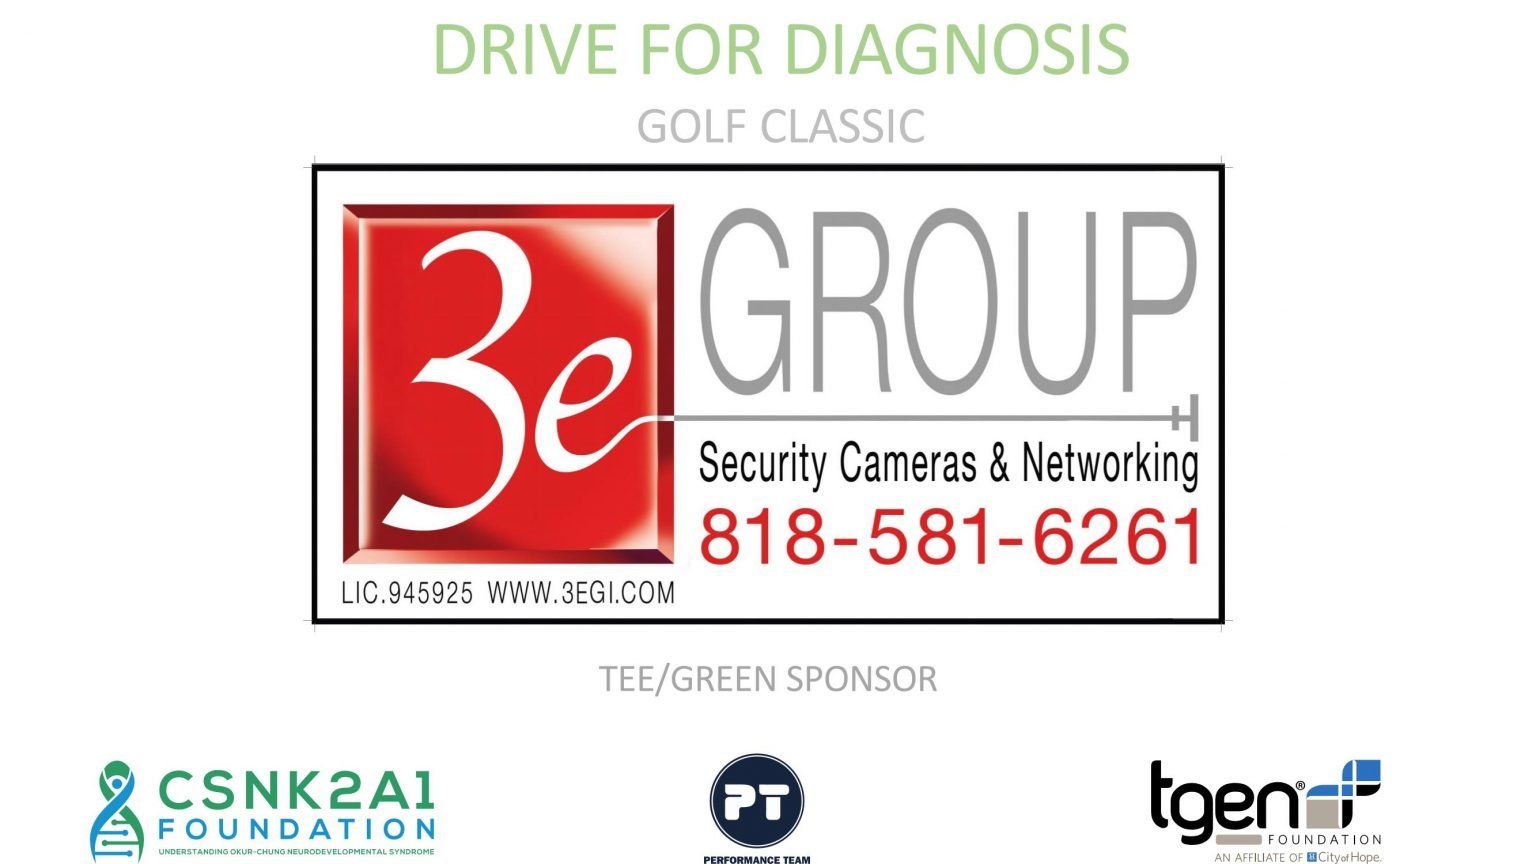 Tee/Green Sponsor - 3e Group